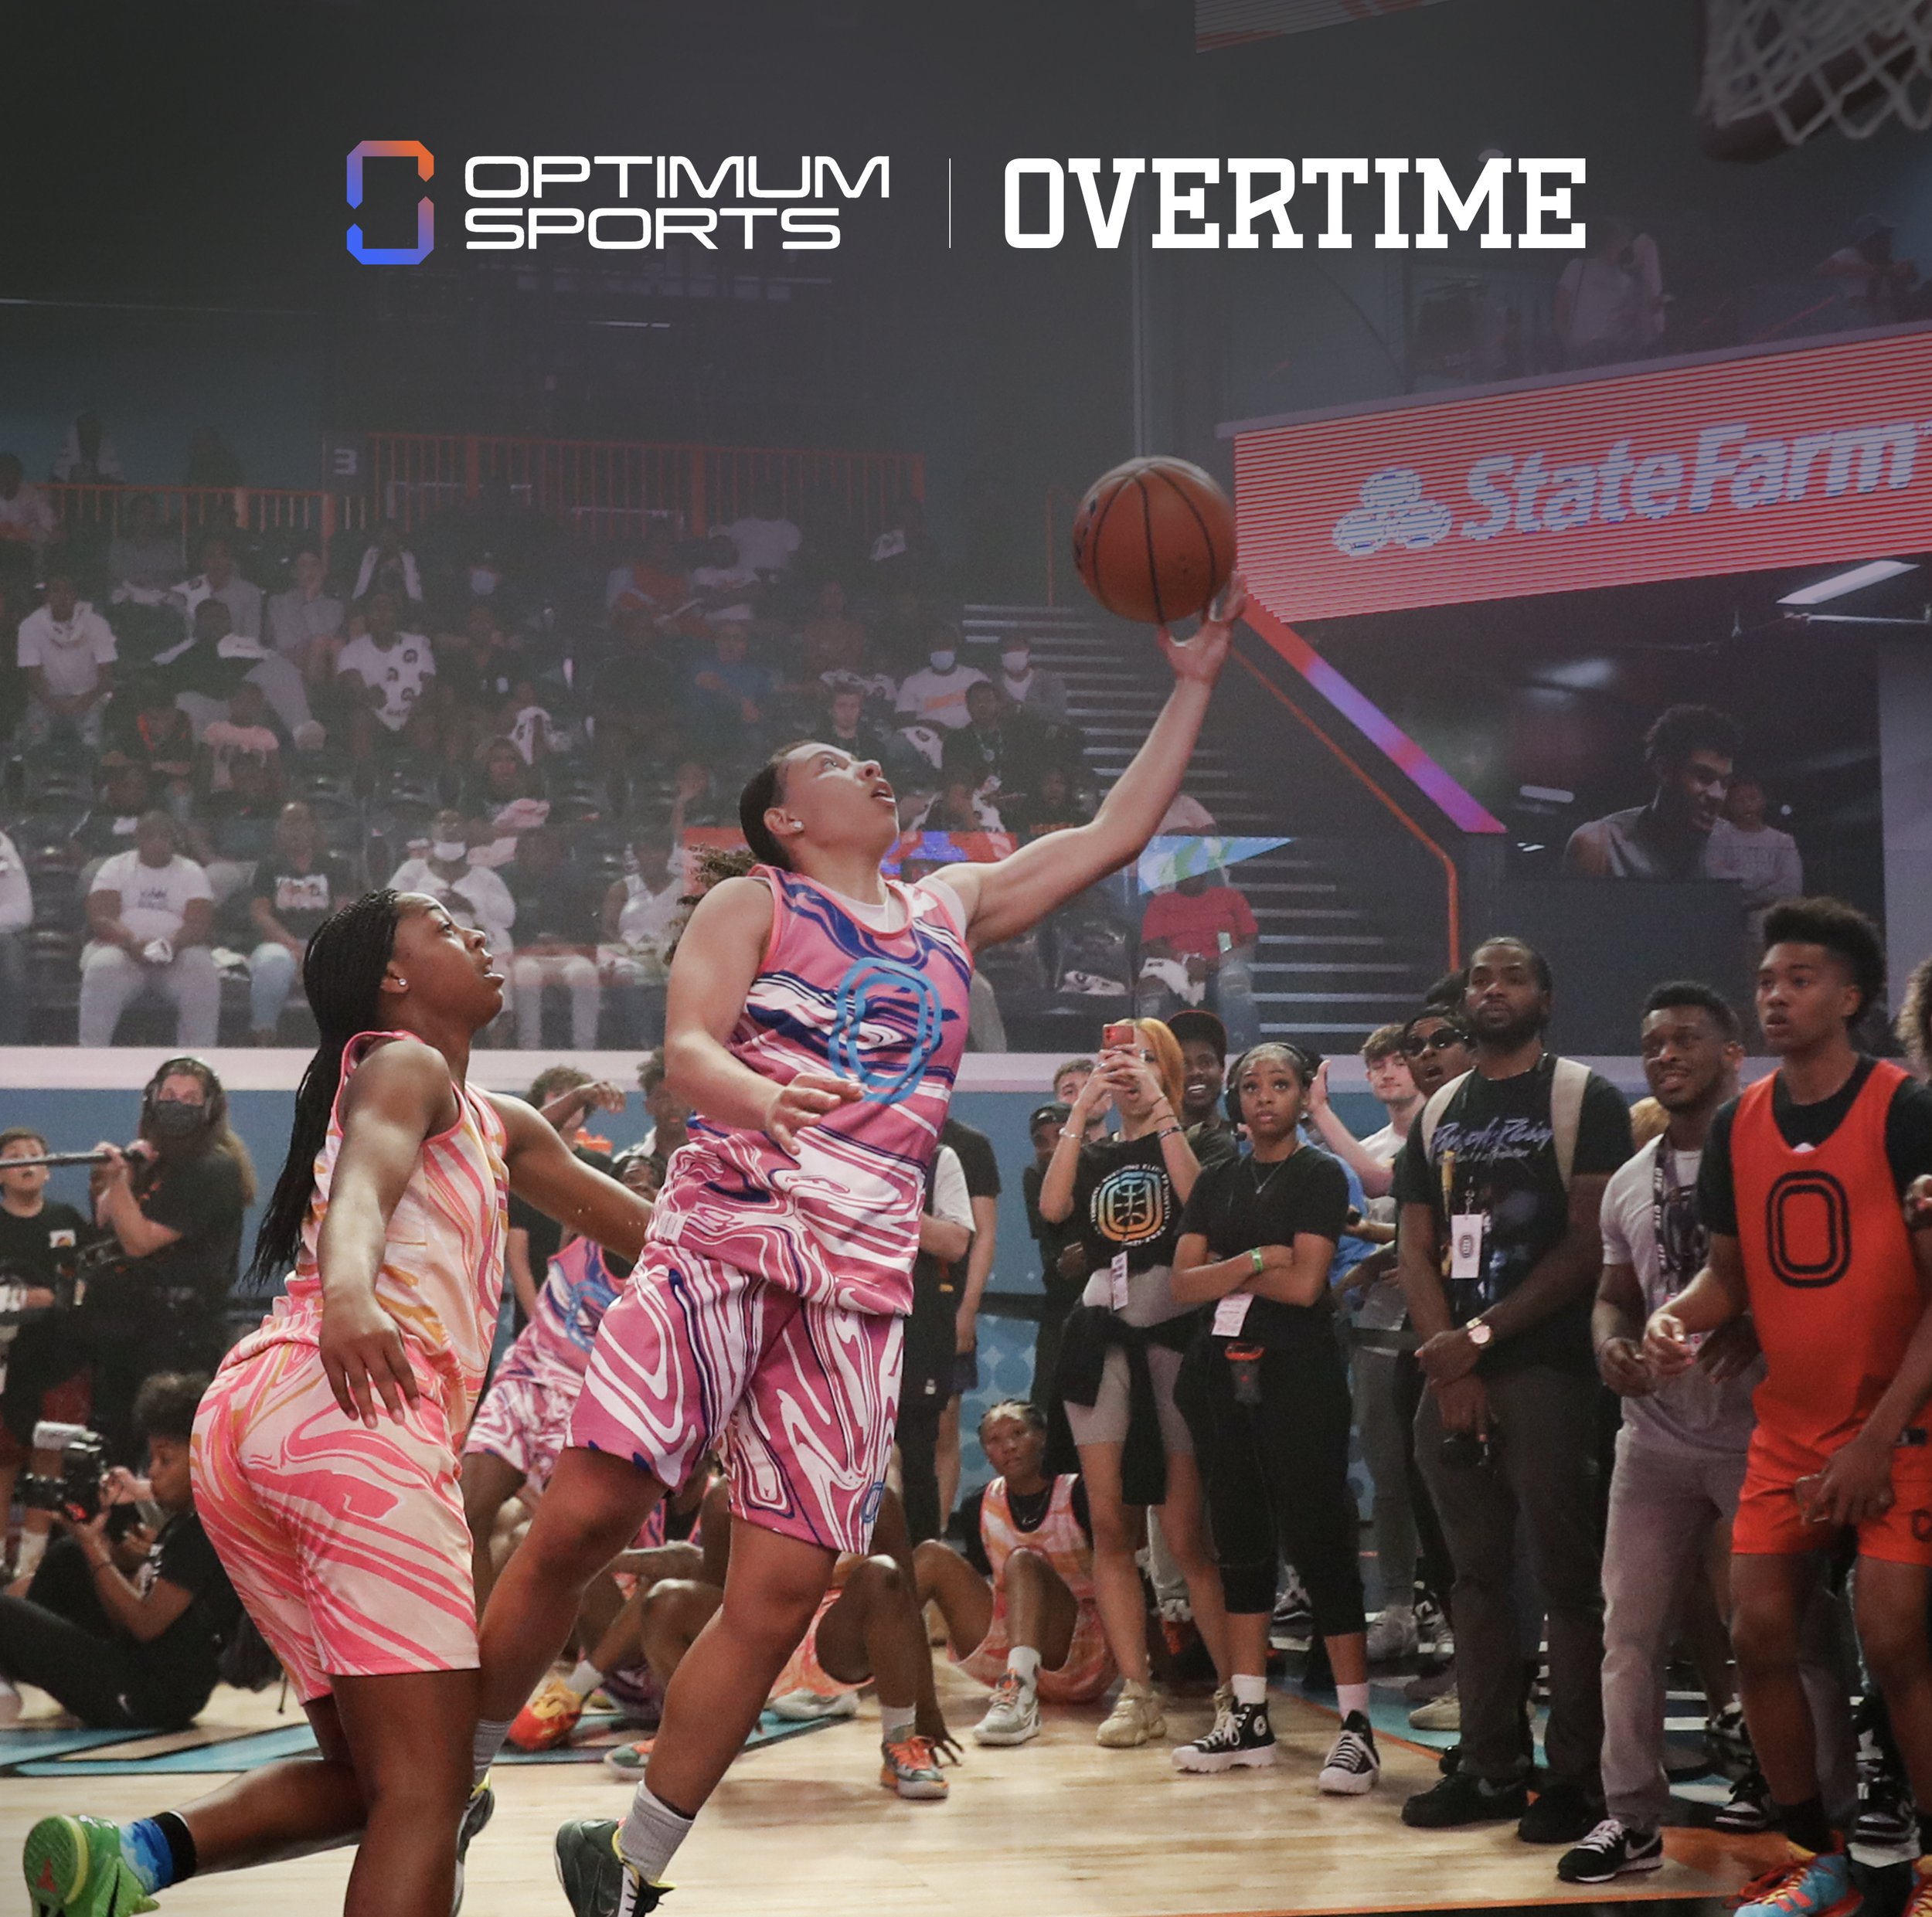 OS Overtime WNBA Event alt 5.jpg